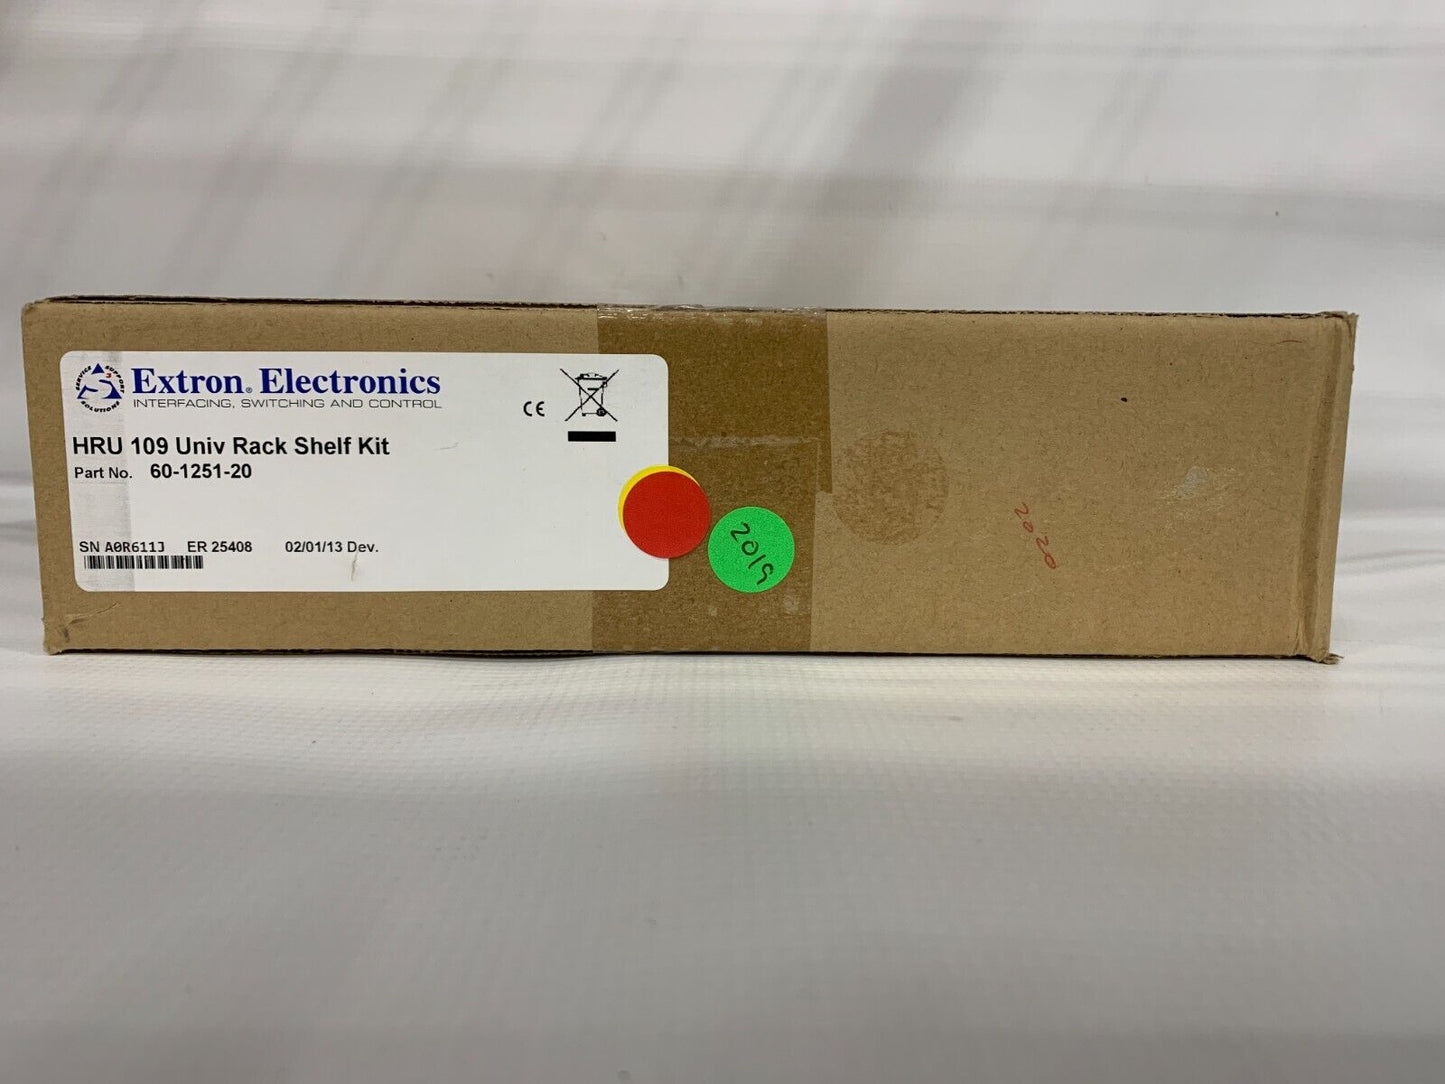 Extron HRU 109 / Universal Half Rack Shelf Kit / 1U